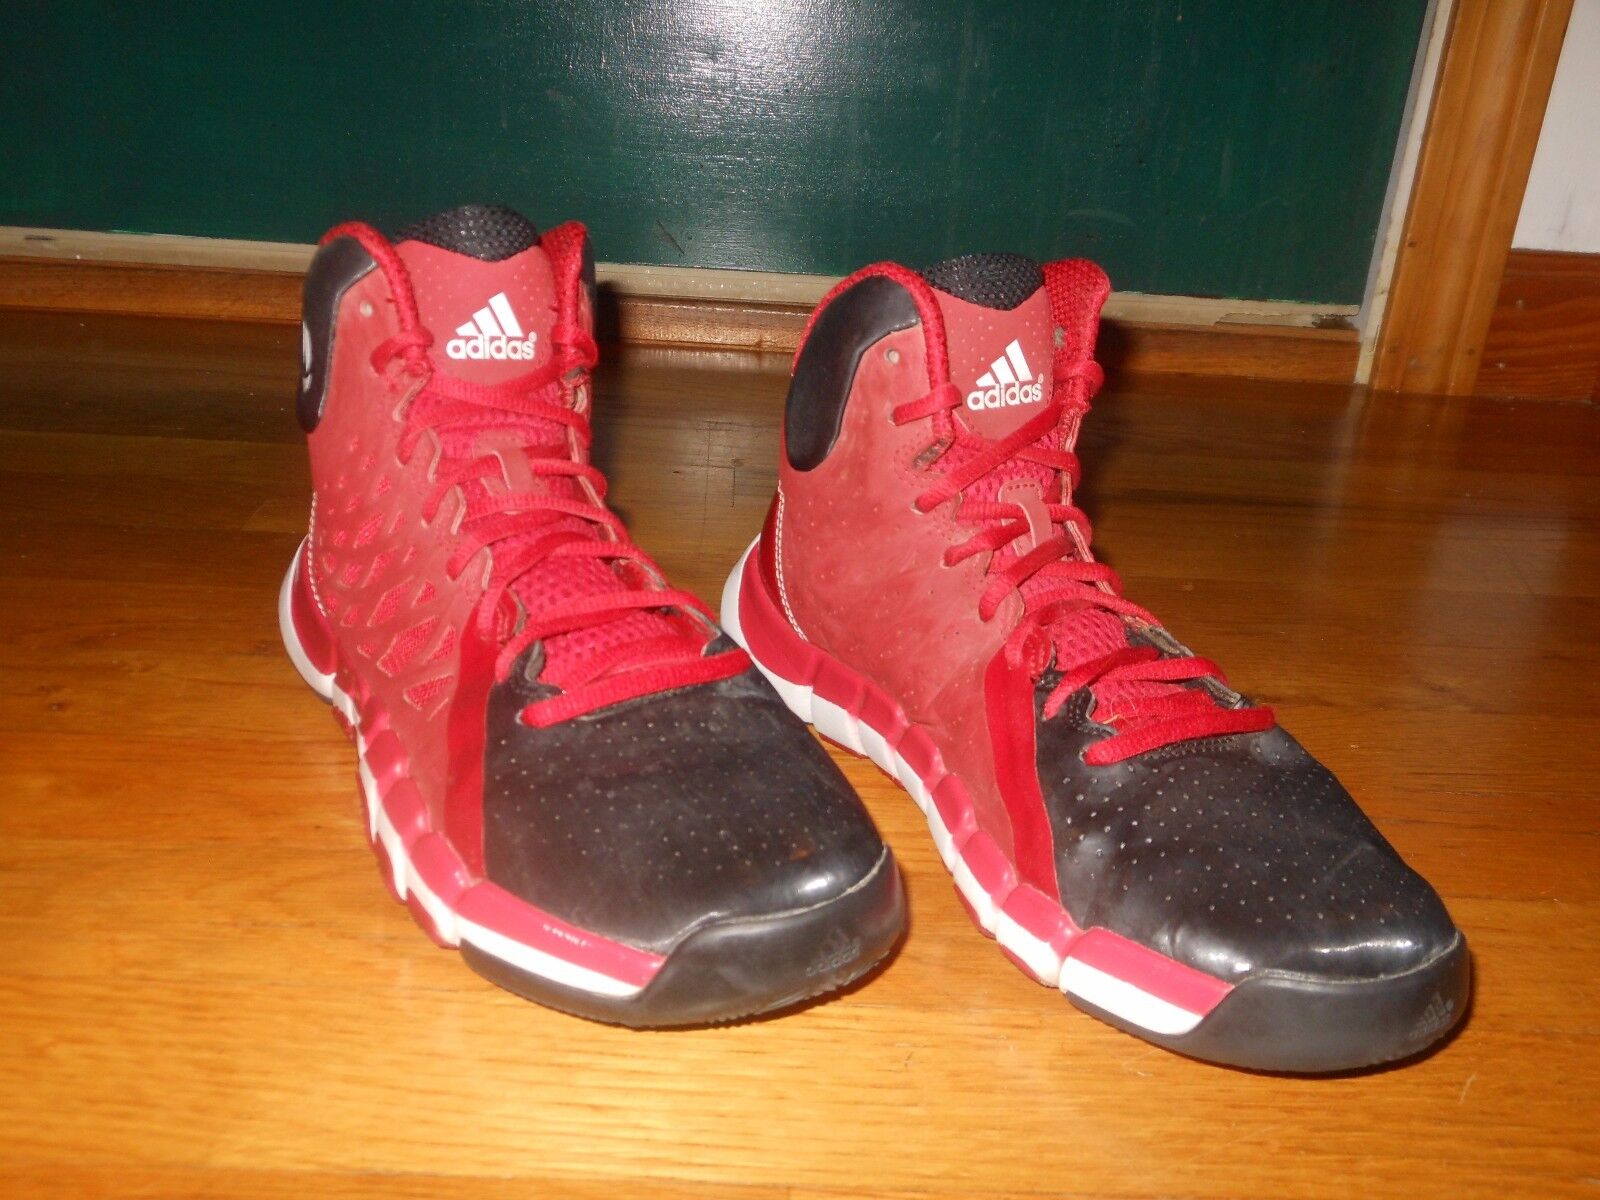 Adidas Derek Rose 773 II Men's basketball shoes - Sz 7.5 M - Q33234 - VG  cond